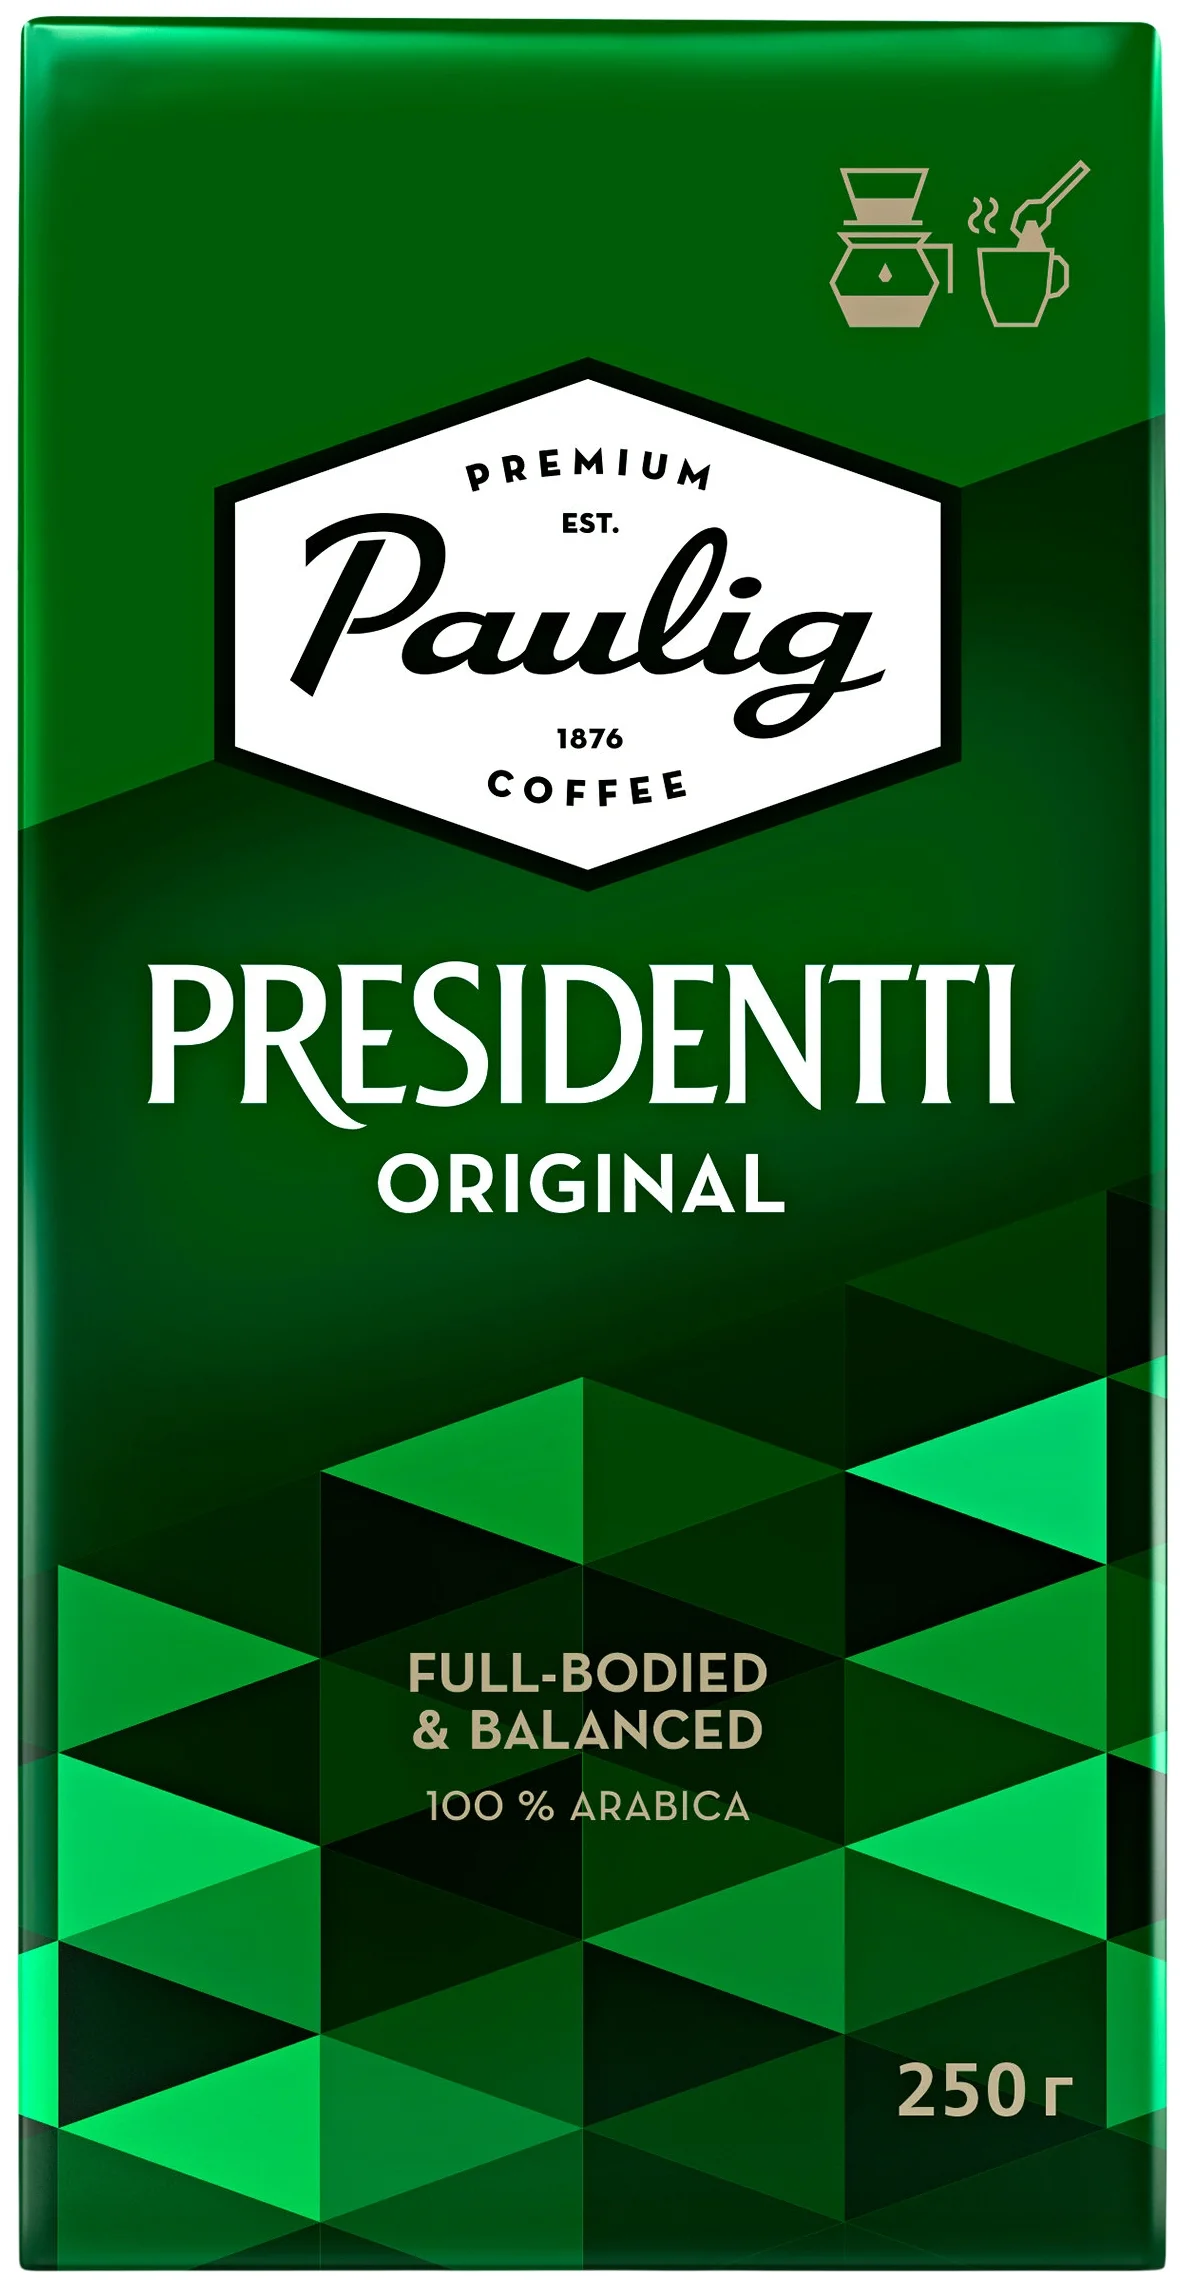 Paulig Presidentti Original - степень обжарки: светлая